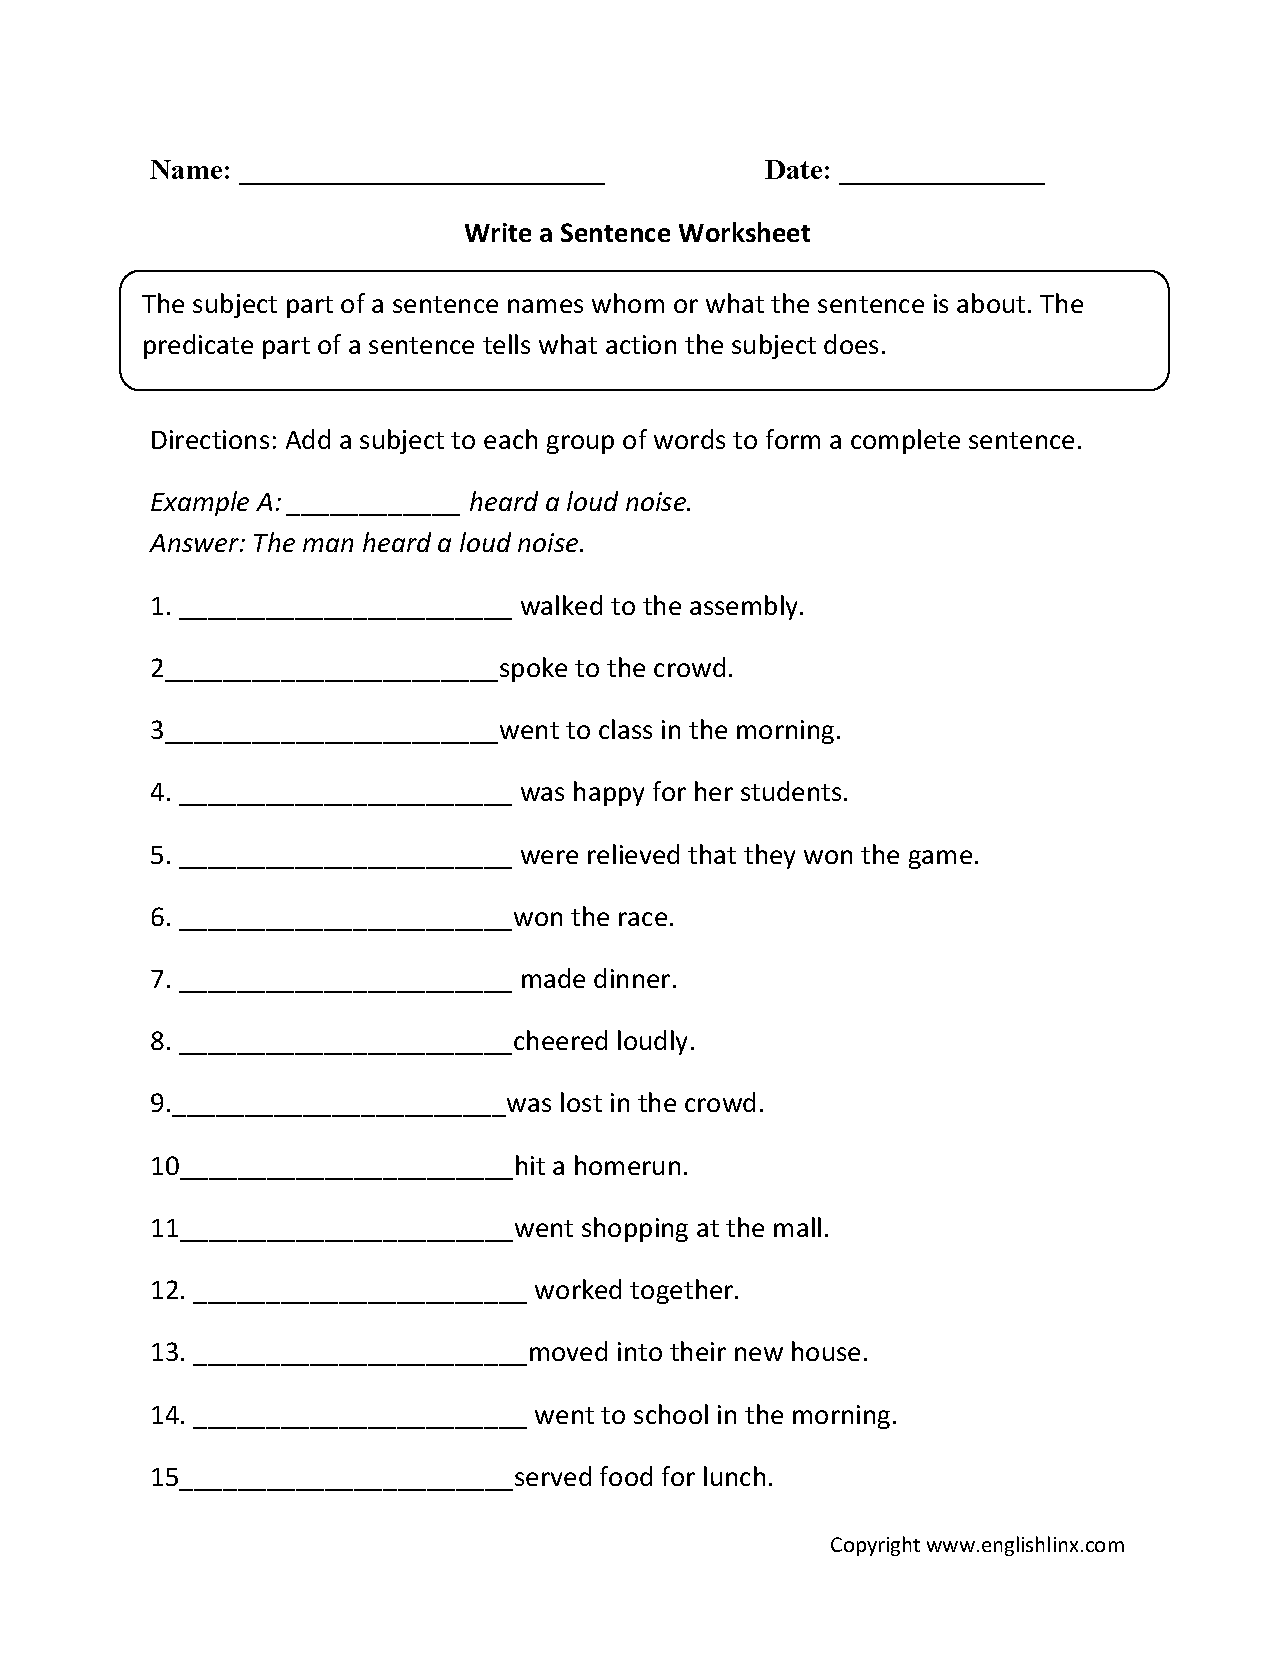 19 Best Images of Sentence Variety Worksheet - 1st Grade Word Problems